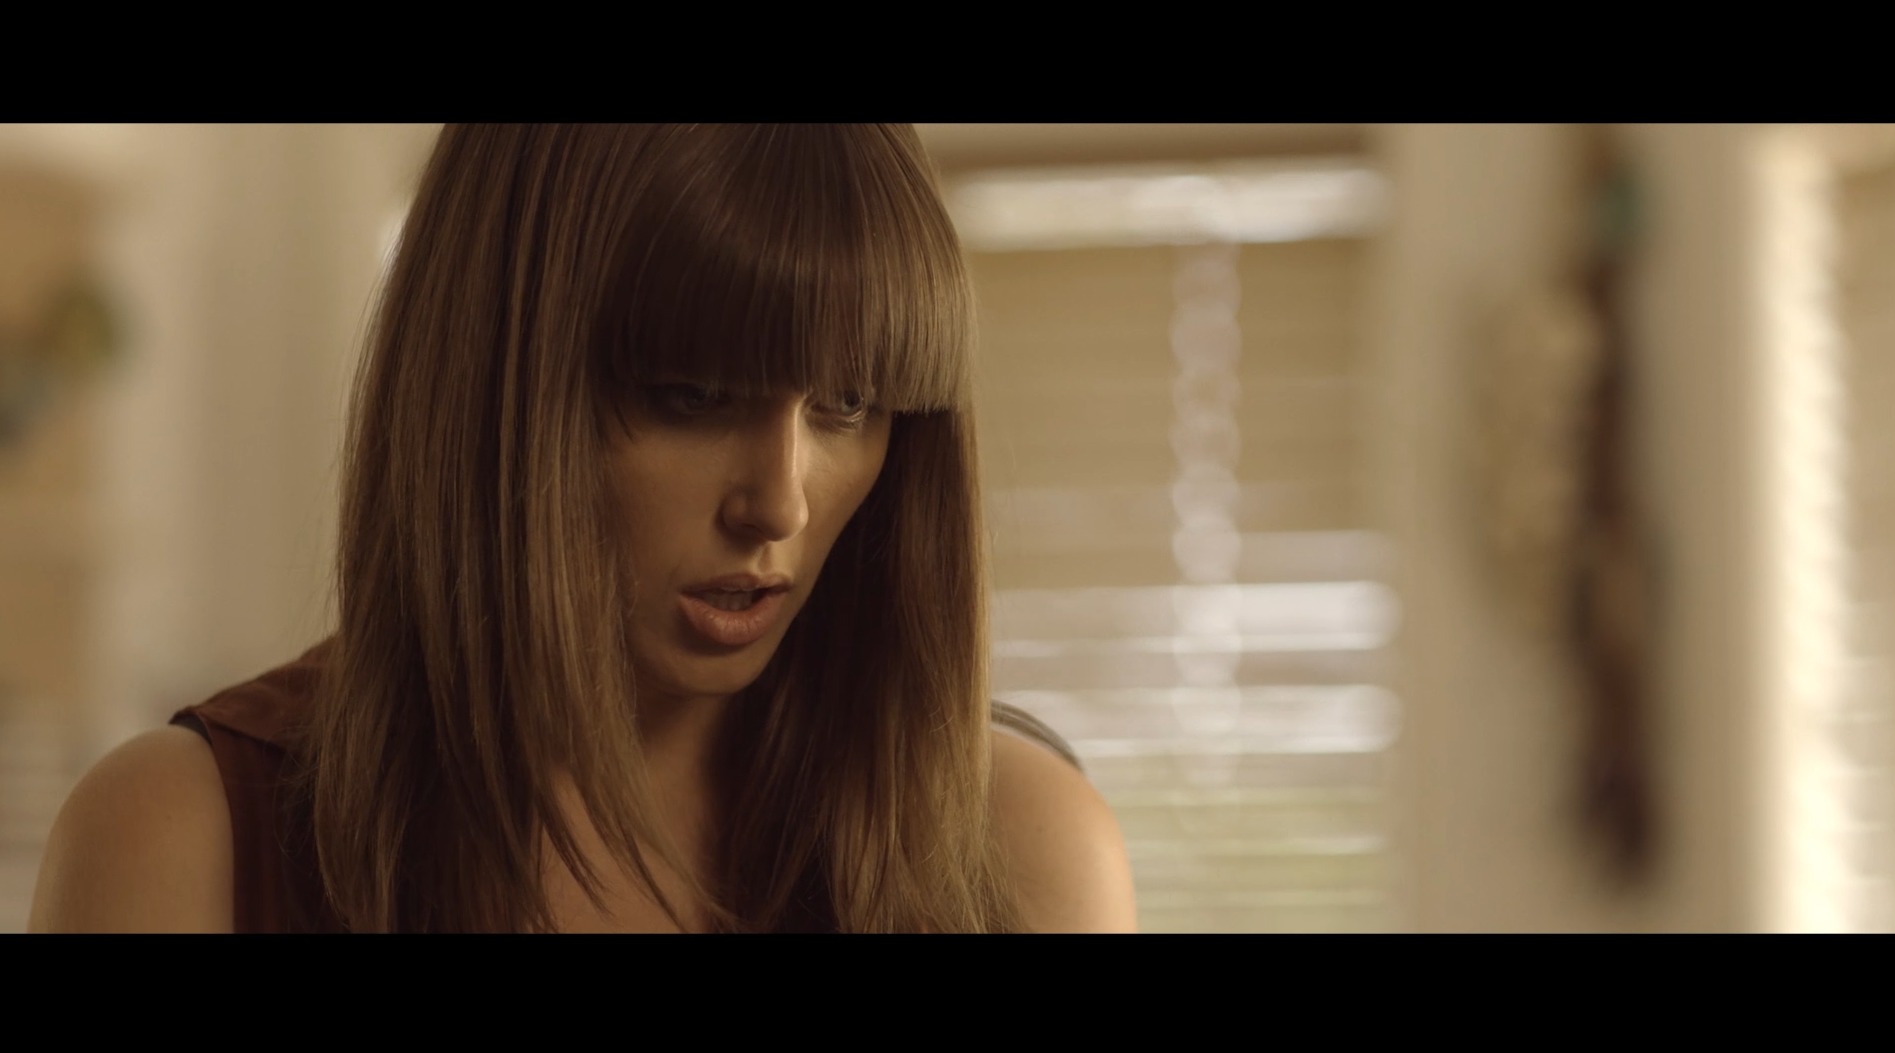 Screenshot from my short film 'Genetics' starring Kelly Robinson